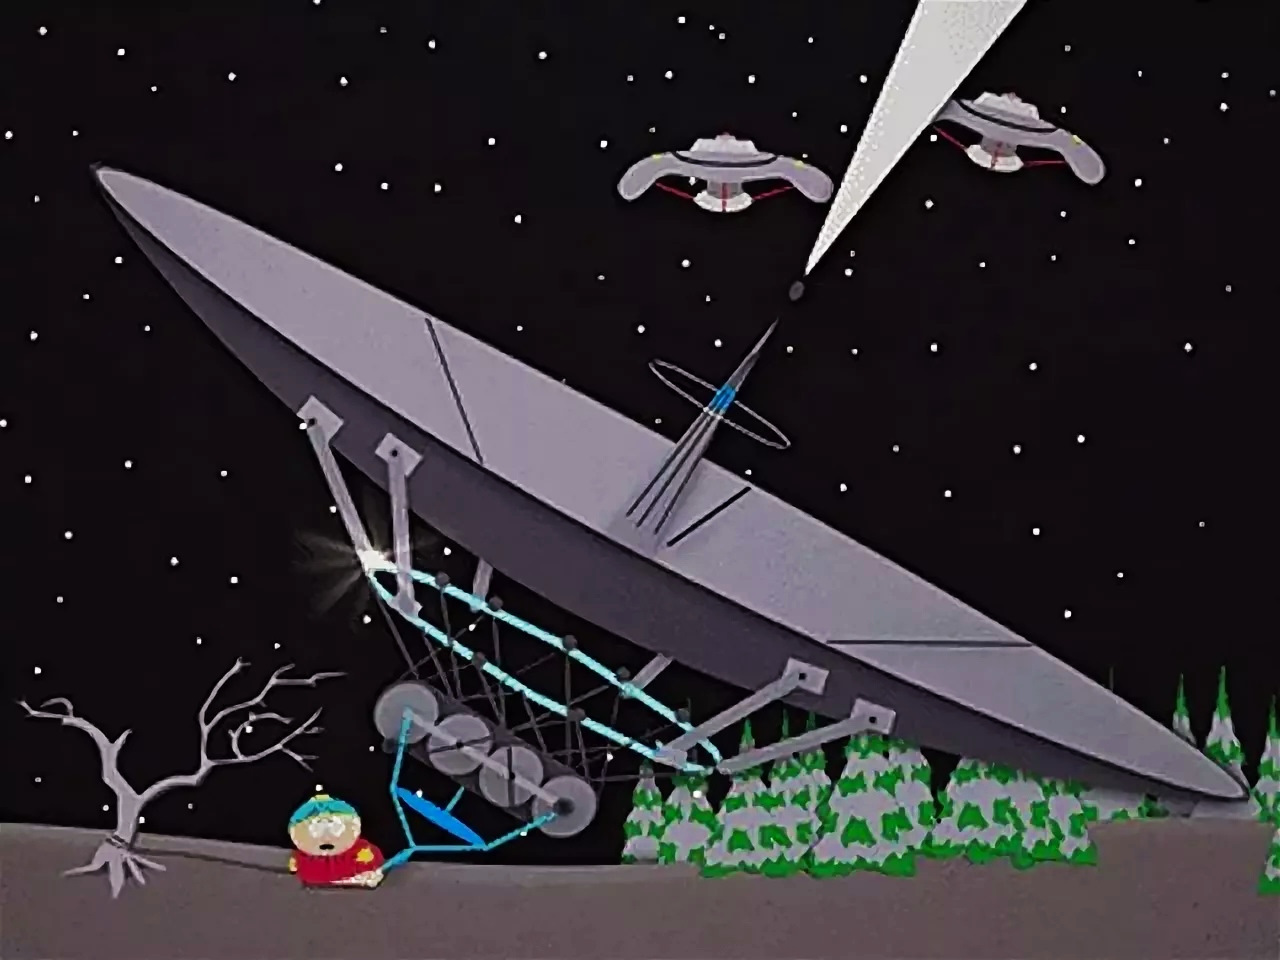 Анальный зонд. Саус парк КАРТМАН И анальный зонд. South Park анальный зонд Картмана.